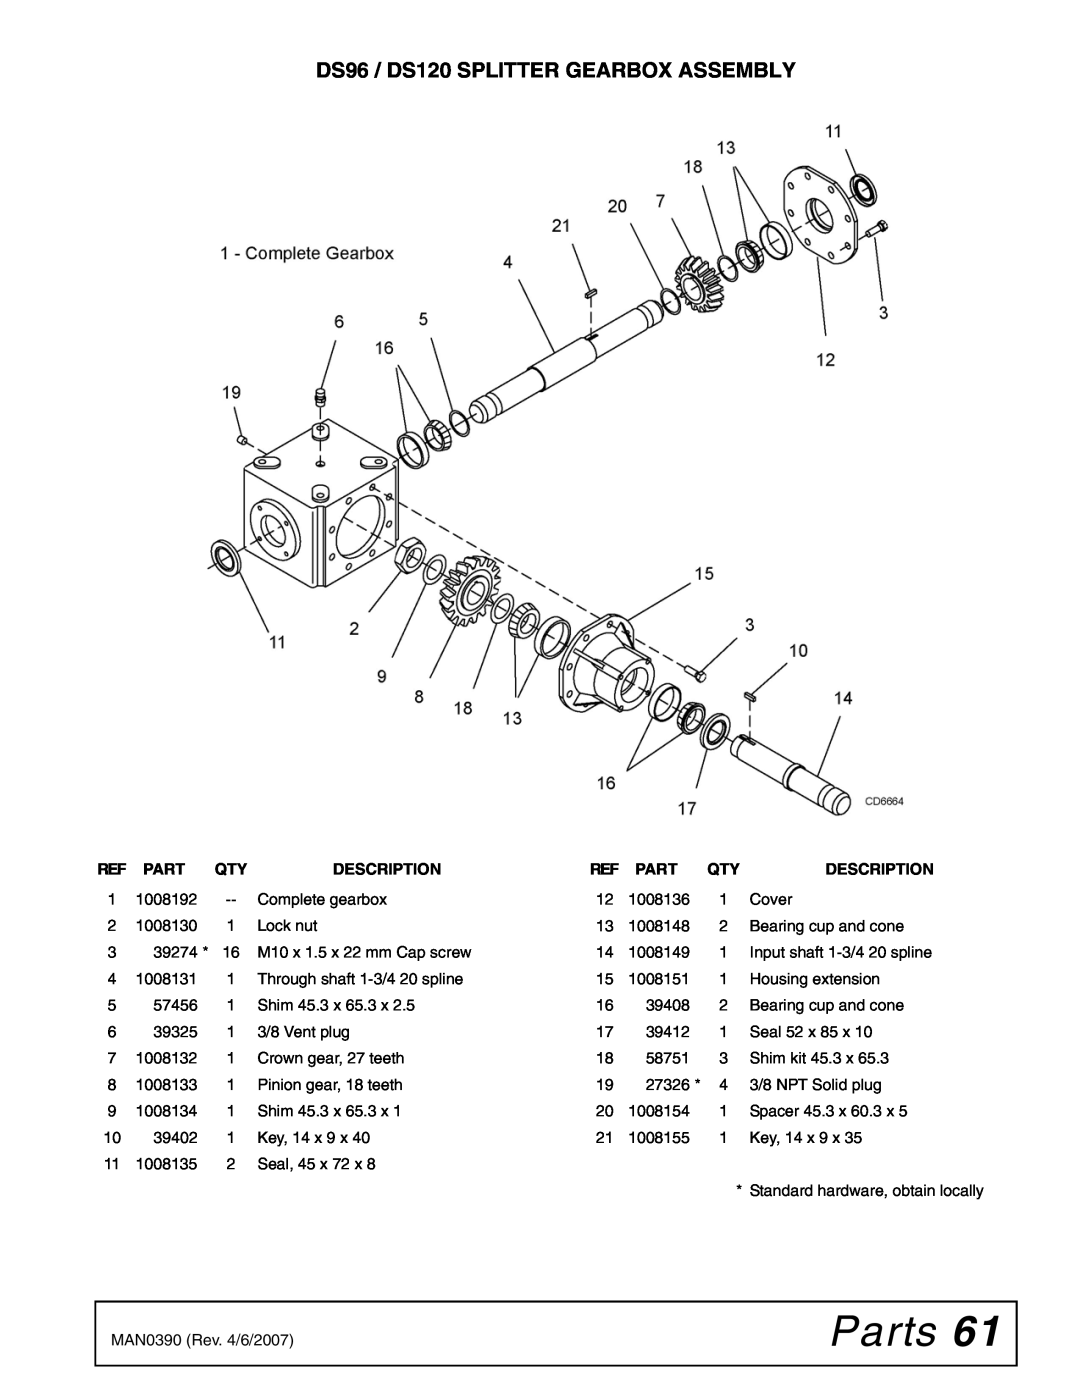 Woods Equipment manual Parts, DS96 / DS120 SPLITTER GEARBOX ASSEMBLY, Description 